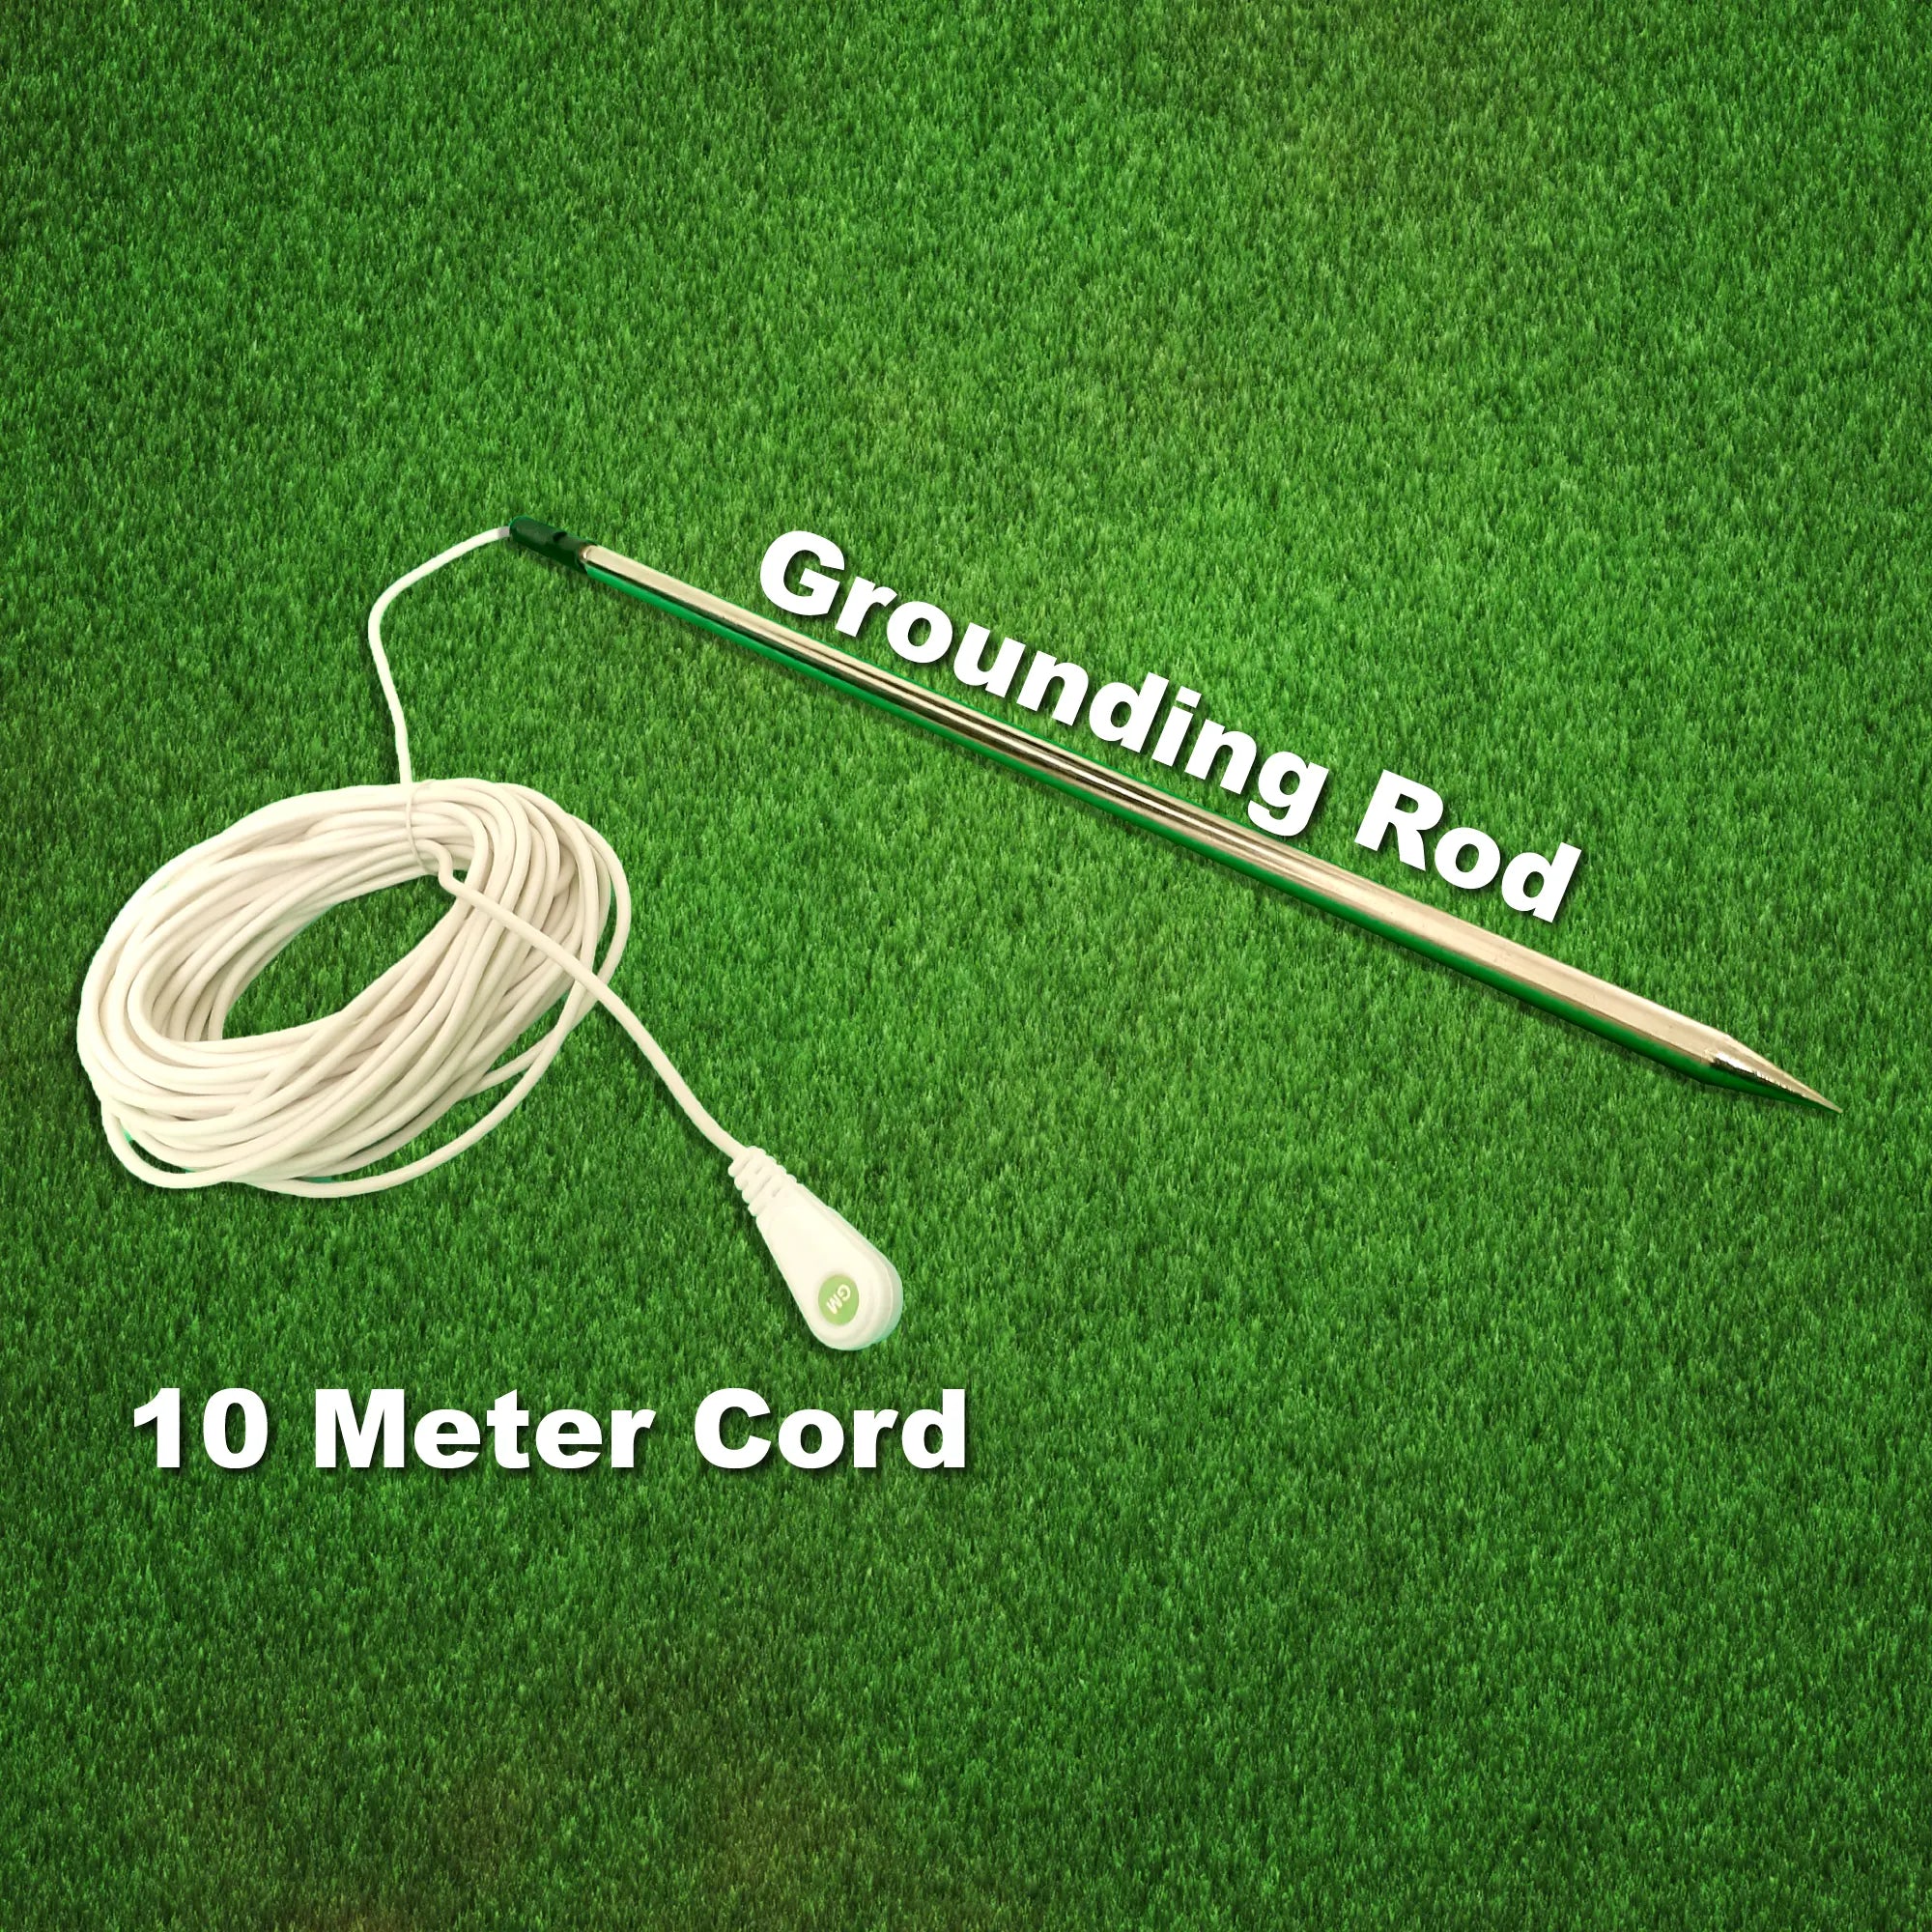 Grounding Rod 